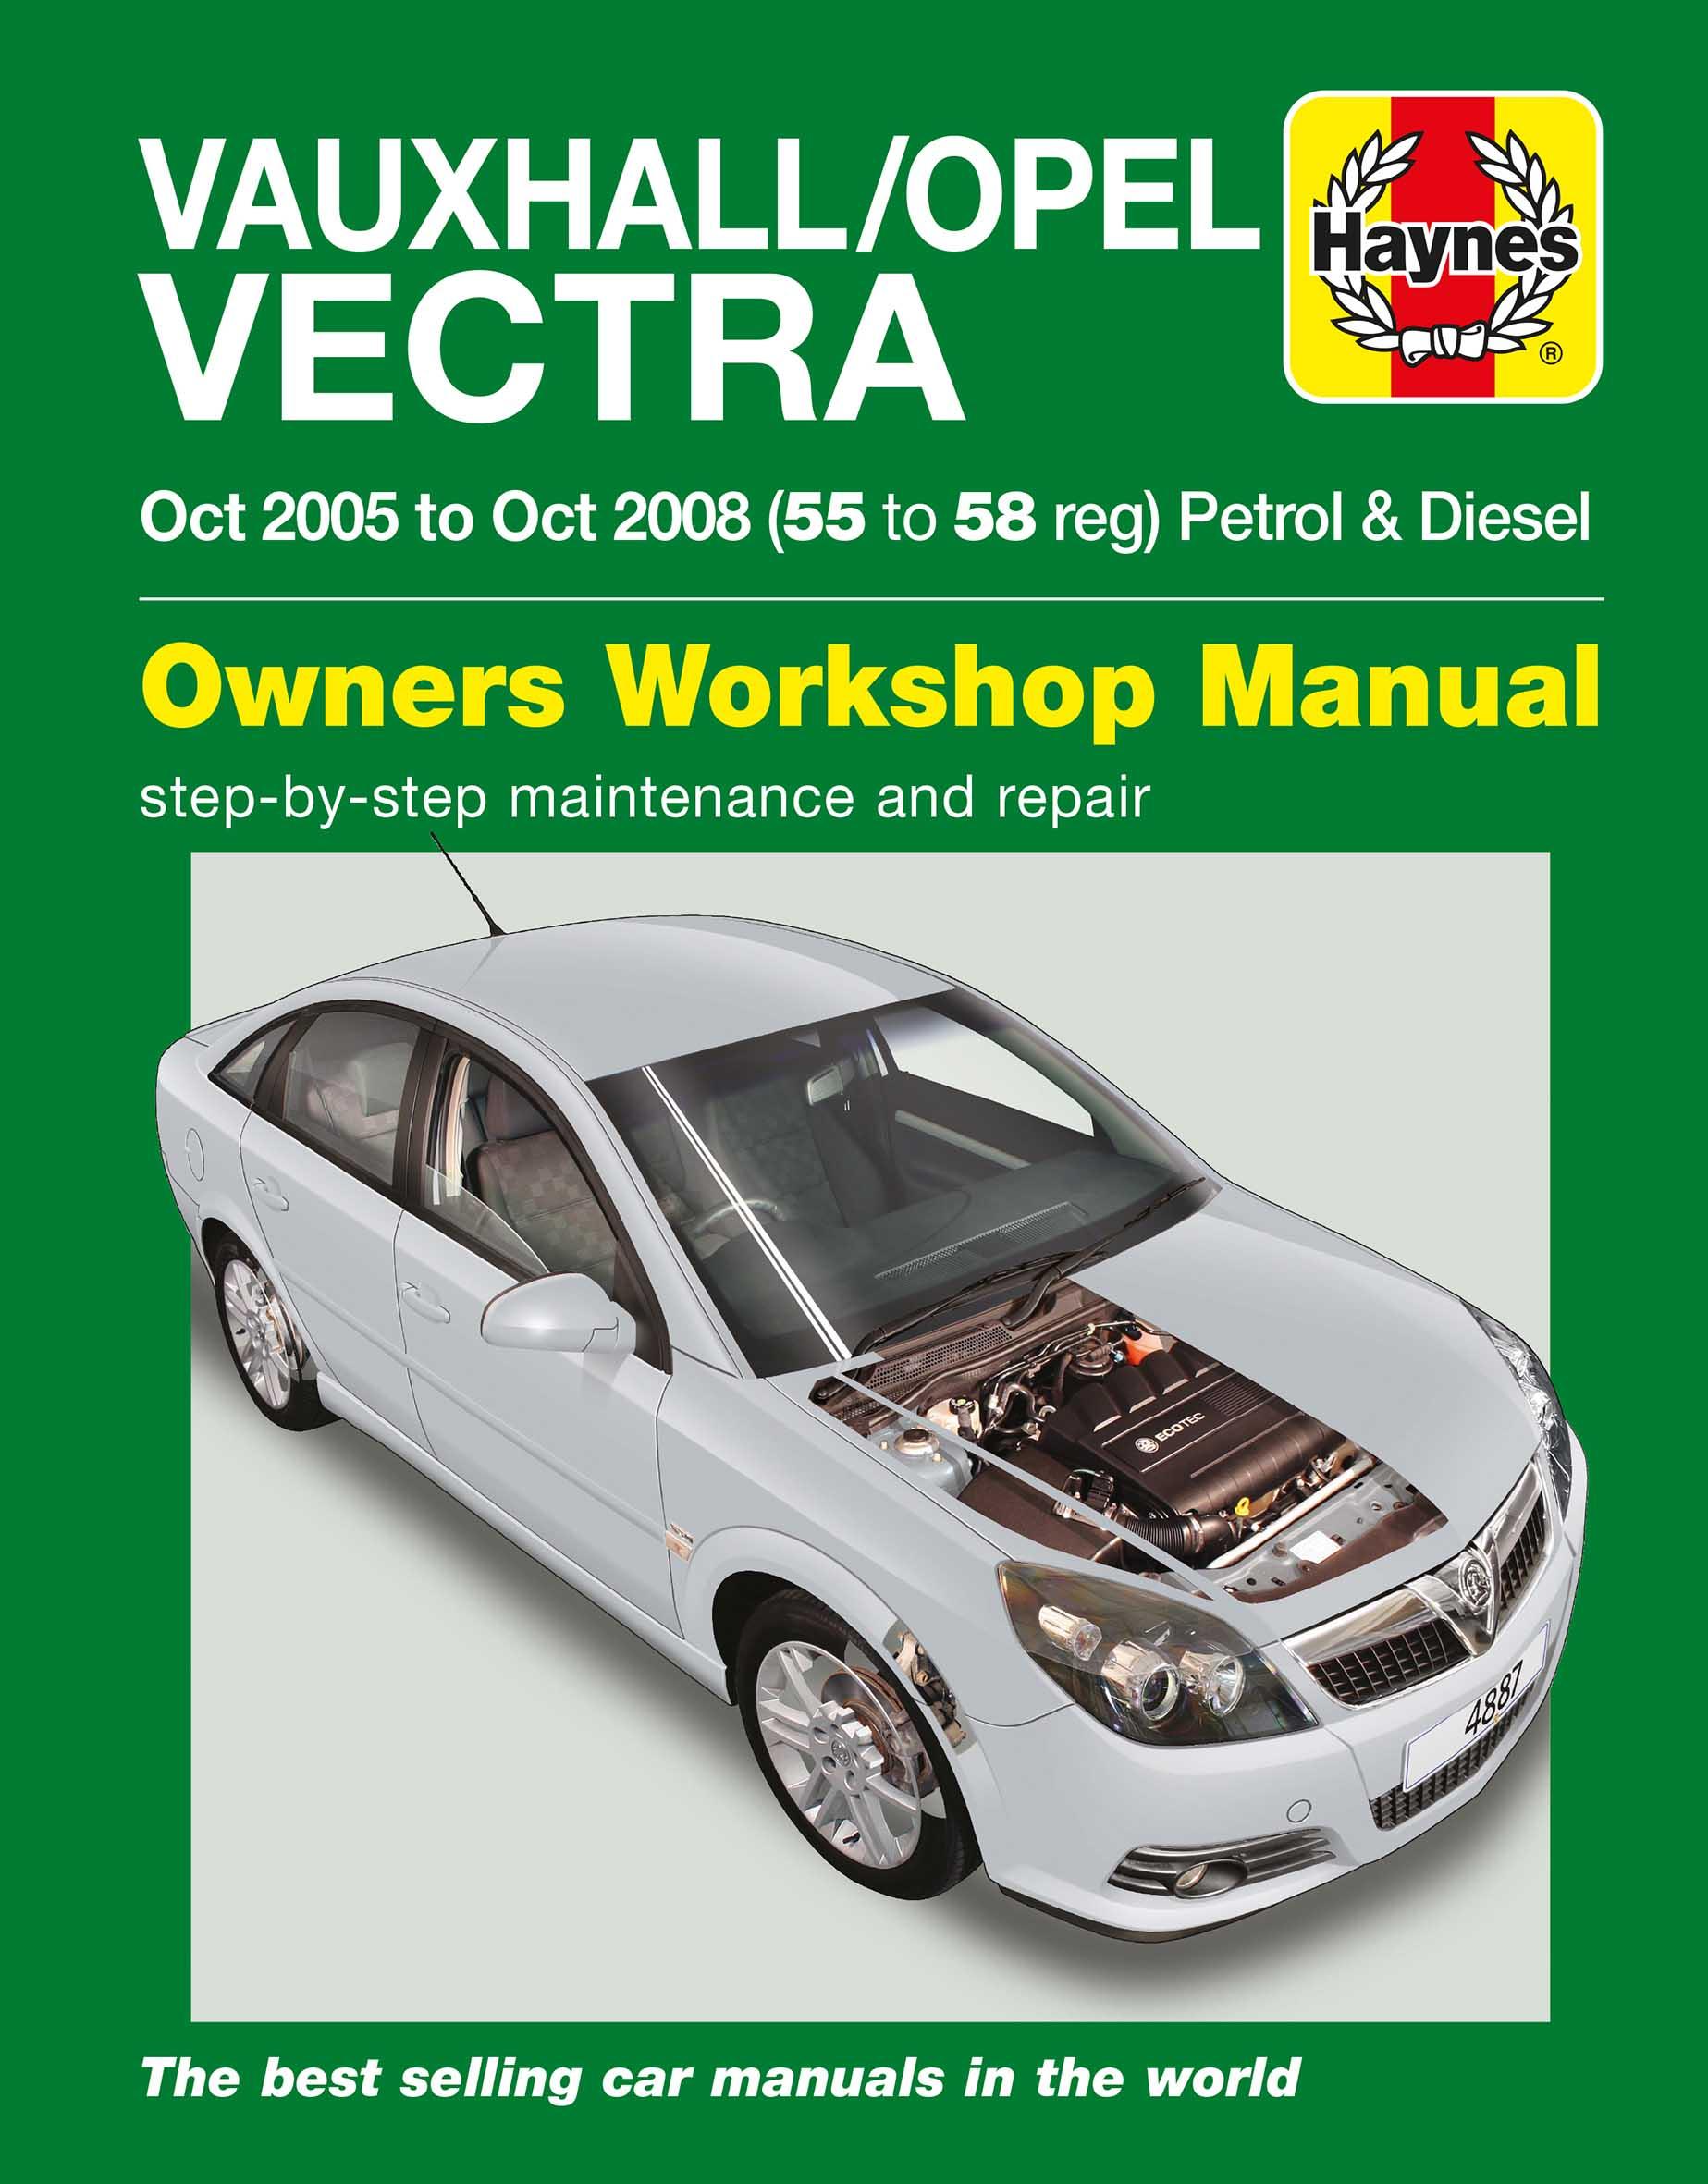 Haynes Vauxhall / Opel Vectra (Oct 05 - Oct 08) Manual